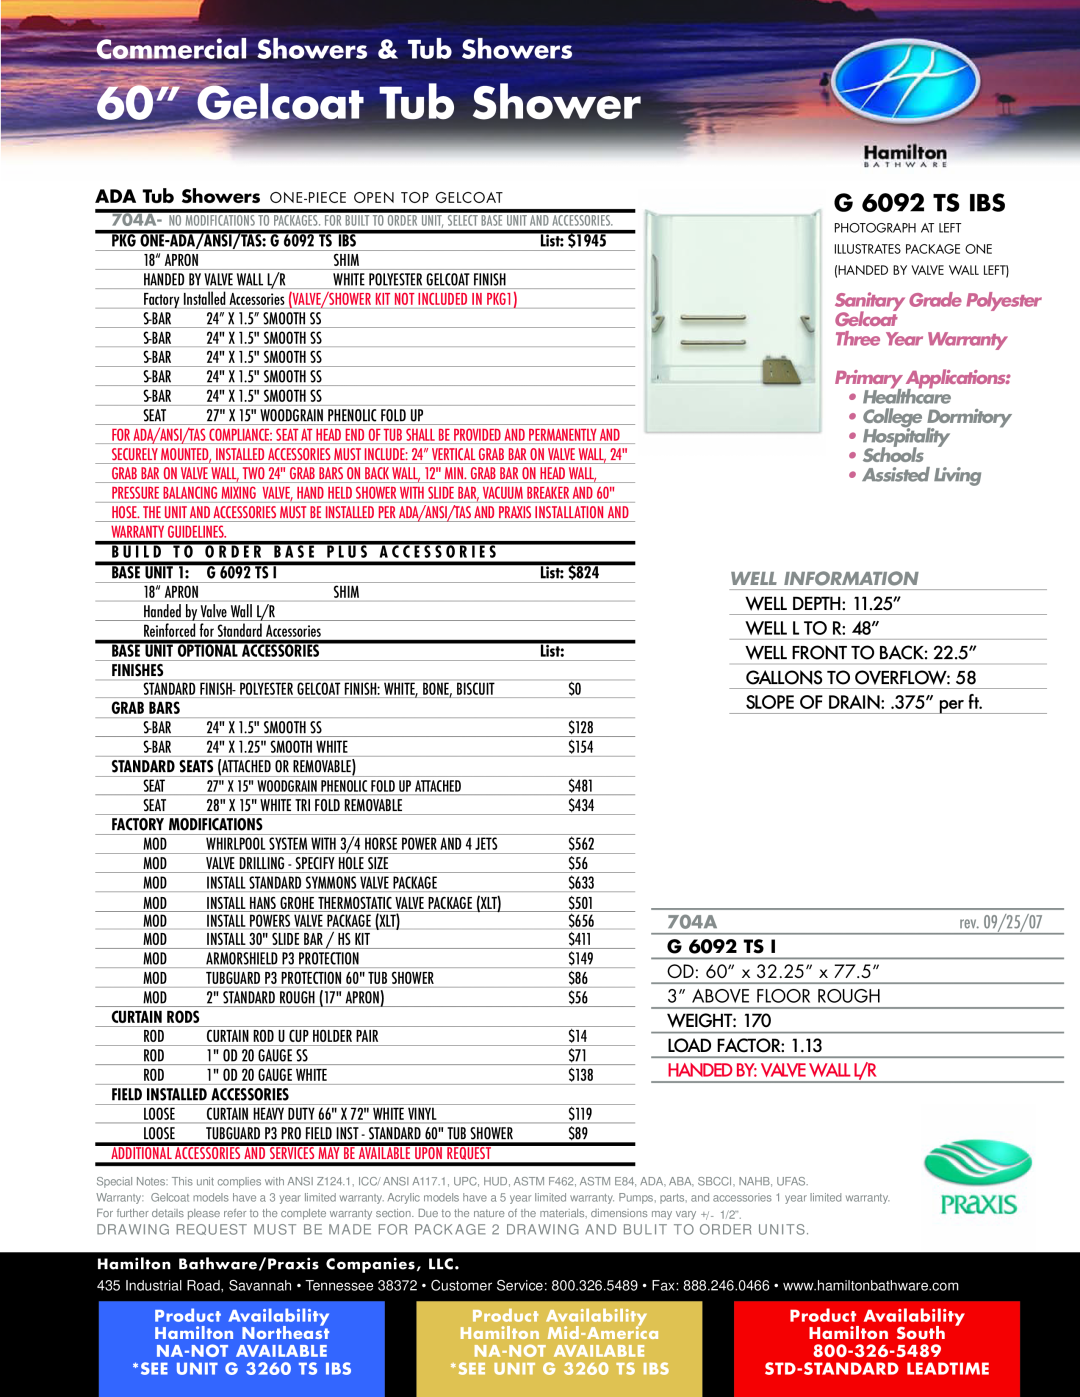 Hamilton Electronics A 6436 IBS 60” Gelcoat Tub Shower, G 6092 TS IBS, Sanitary Grade Polyester, Three Year Warranty, 704A 